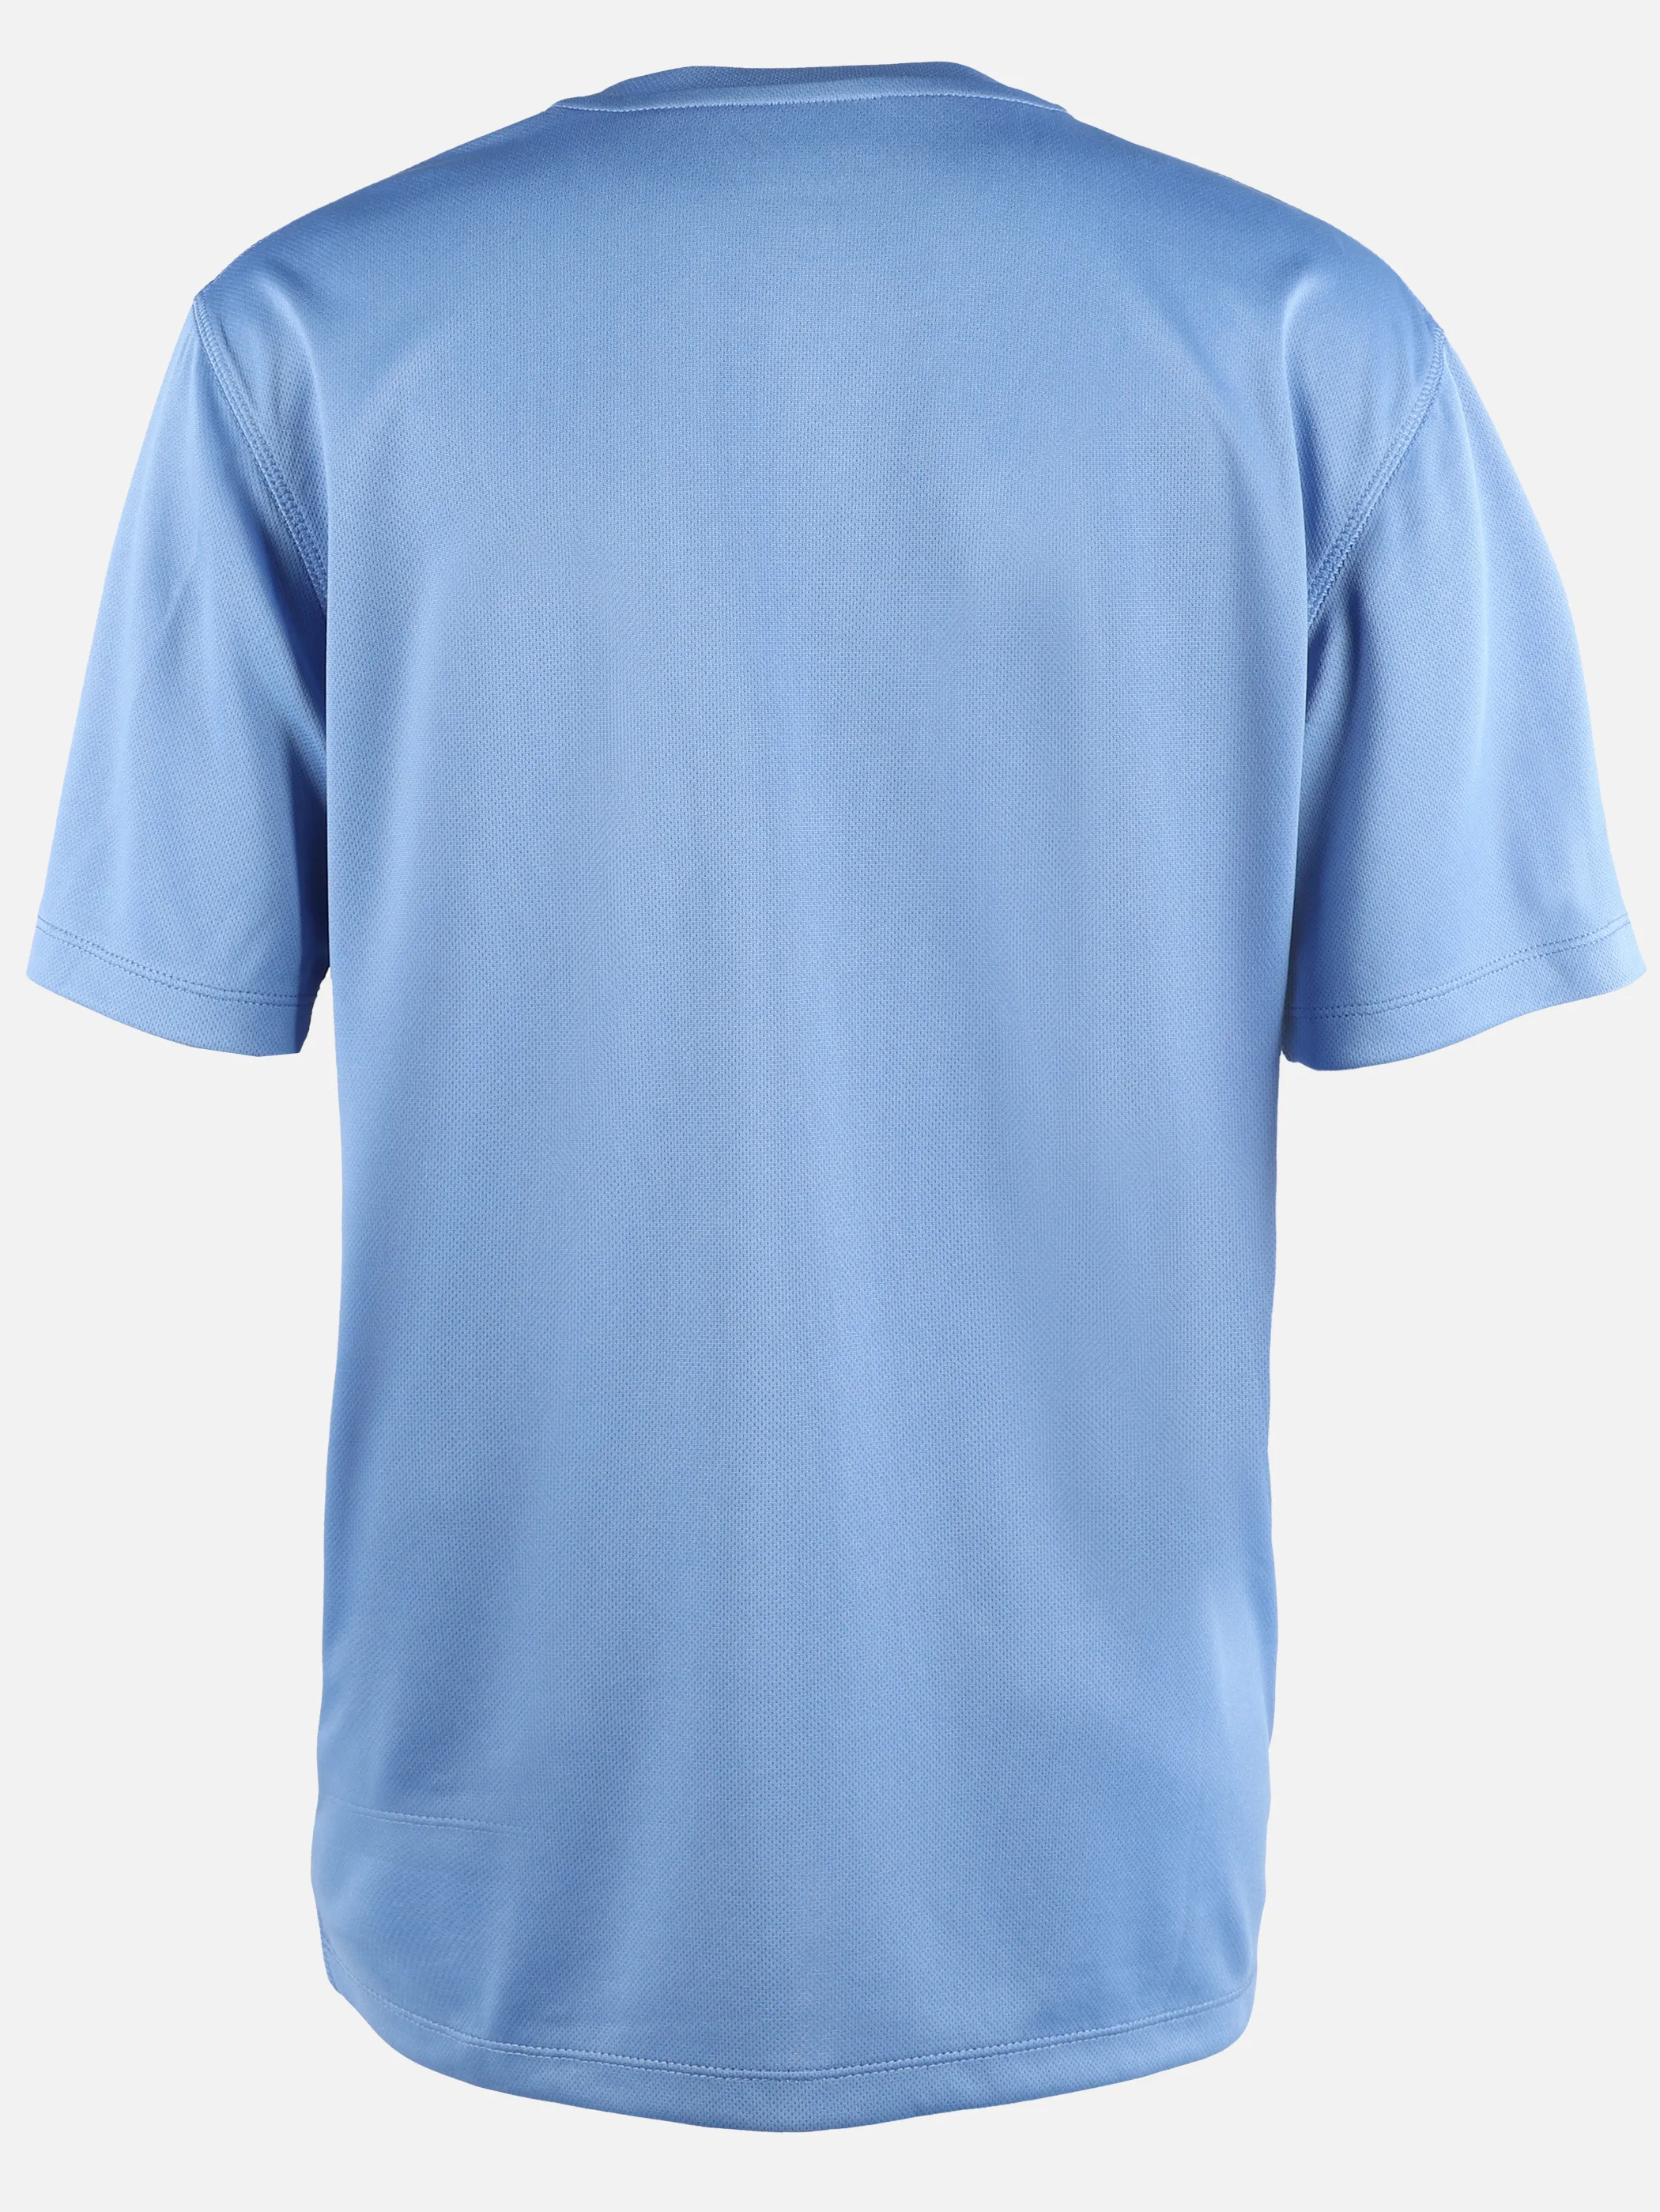 Stop + Go TB- Sport T-Shirt Blau 890102 BLUE 2